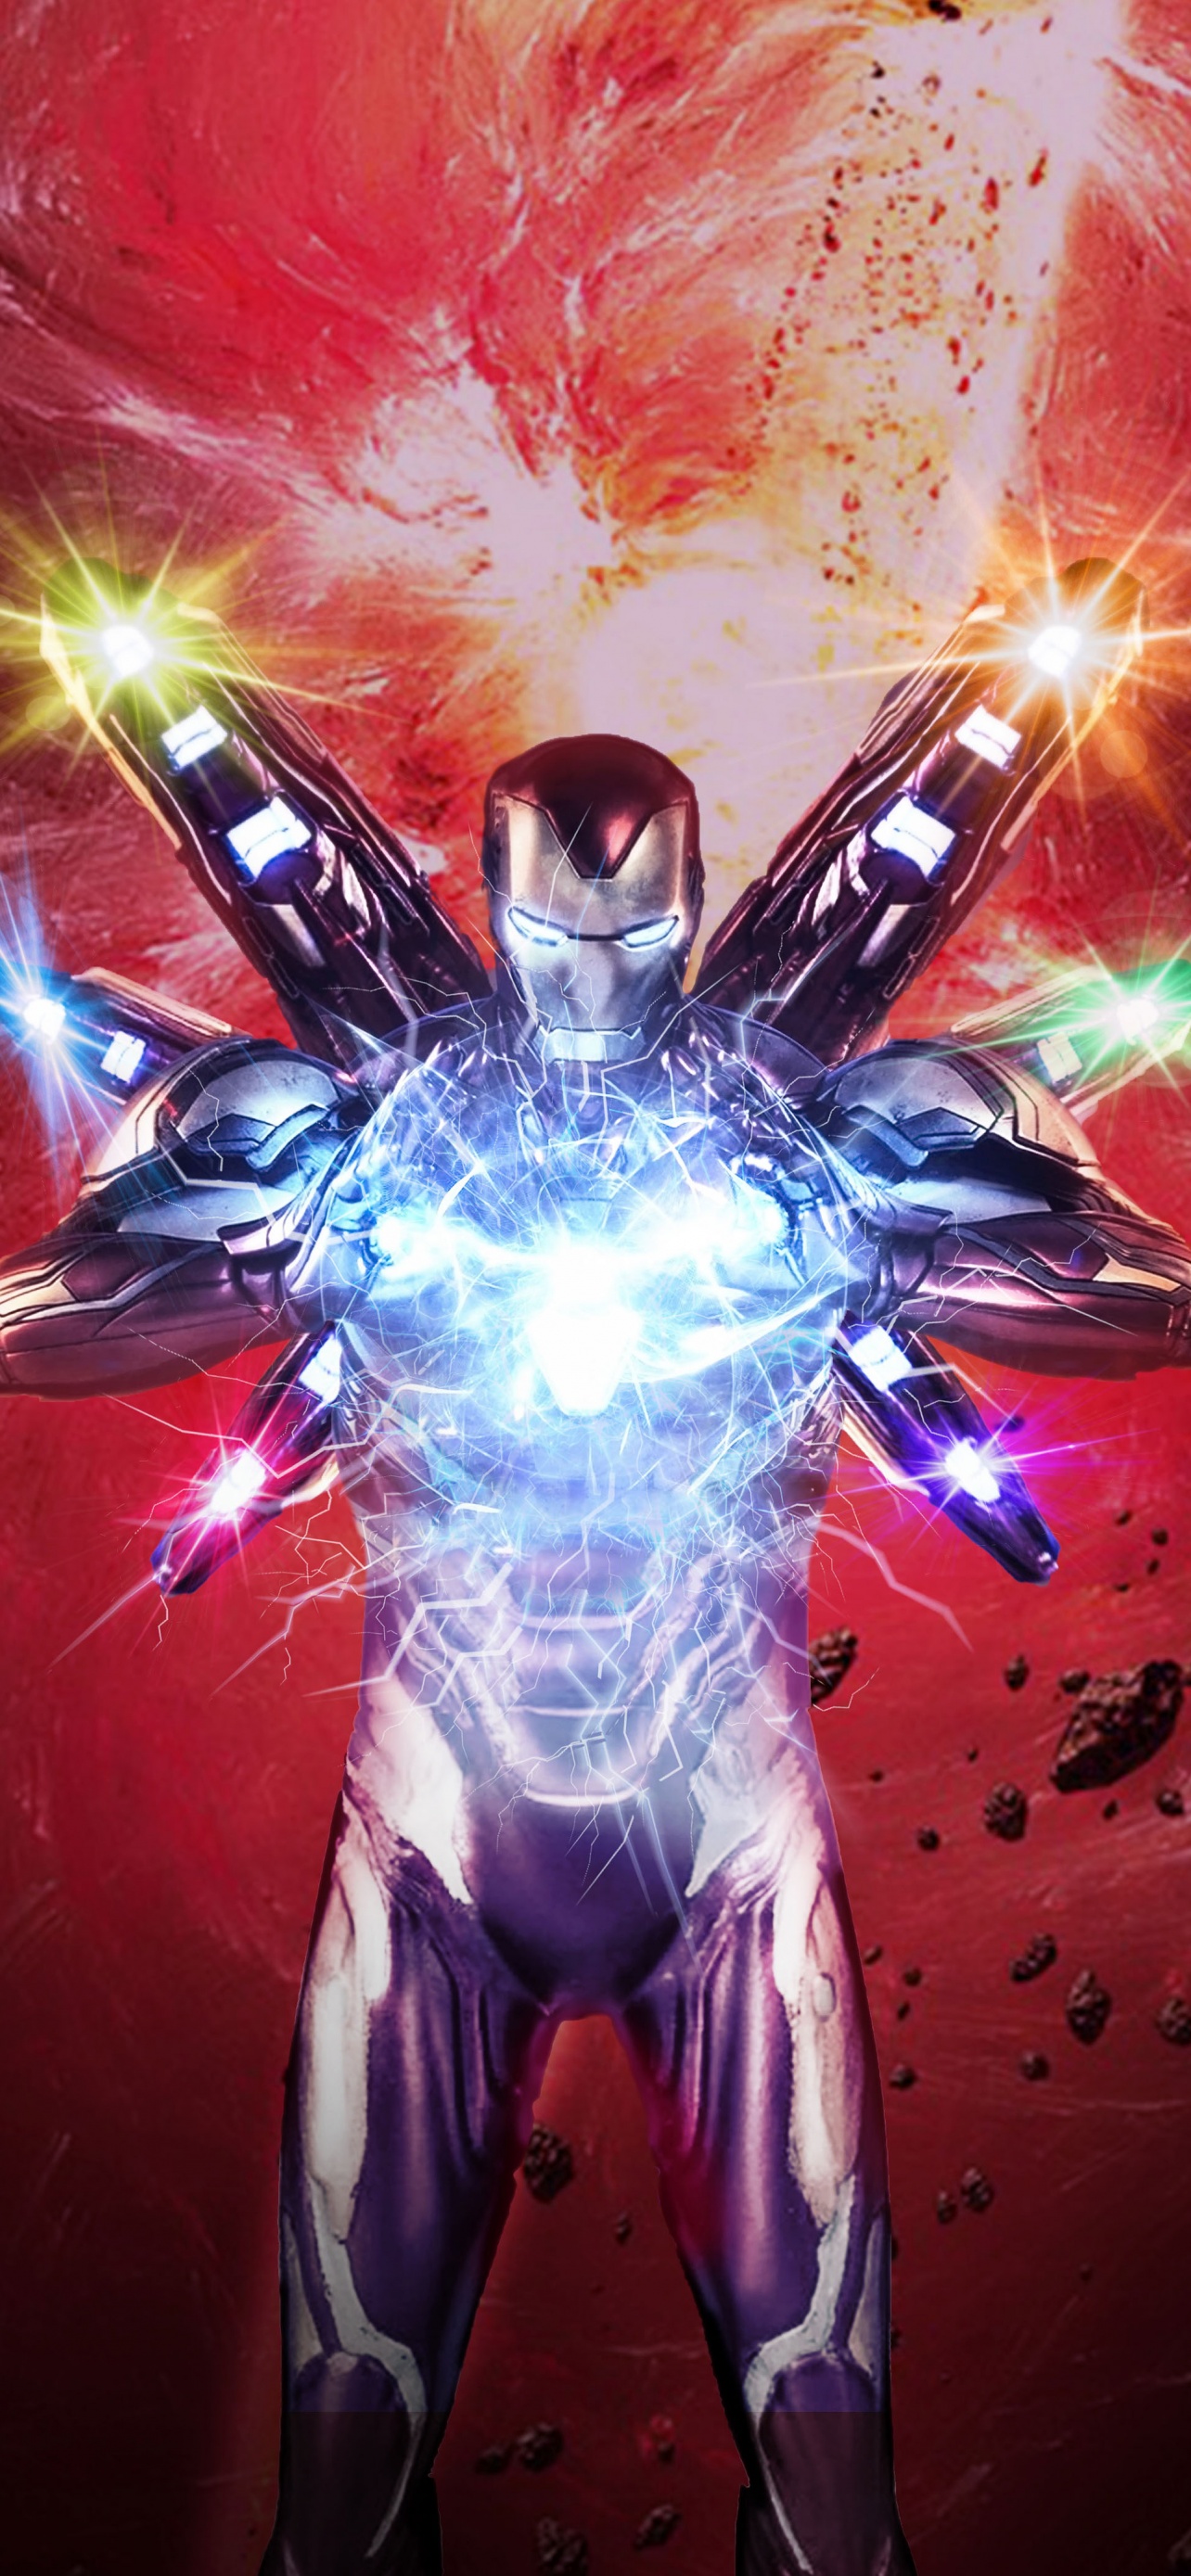 Avengers Infinity War Minimalist 4K wallpaper download